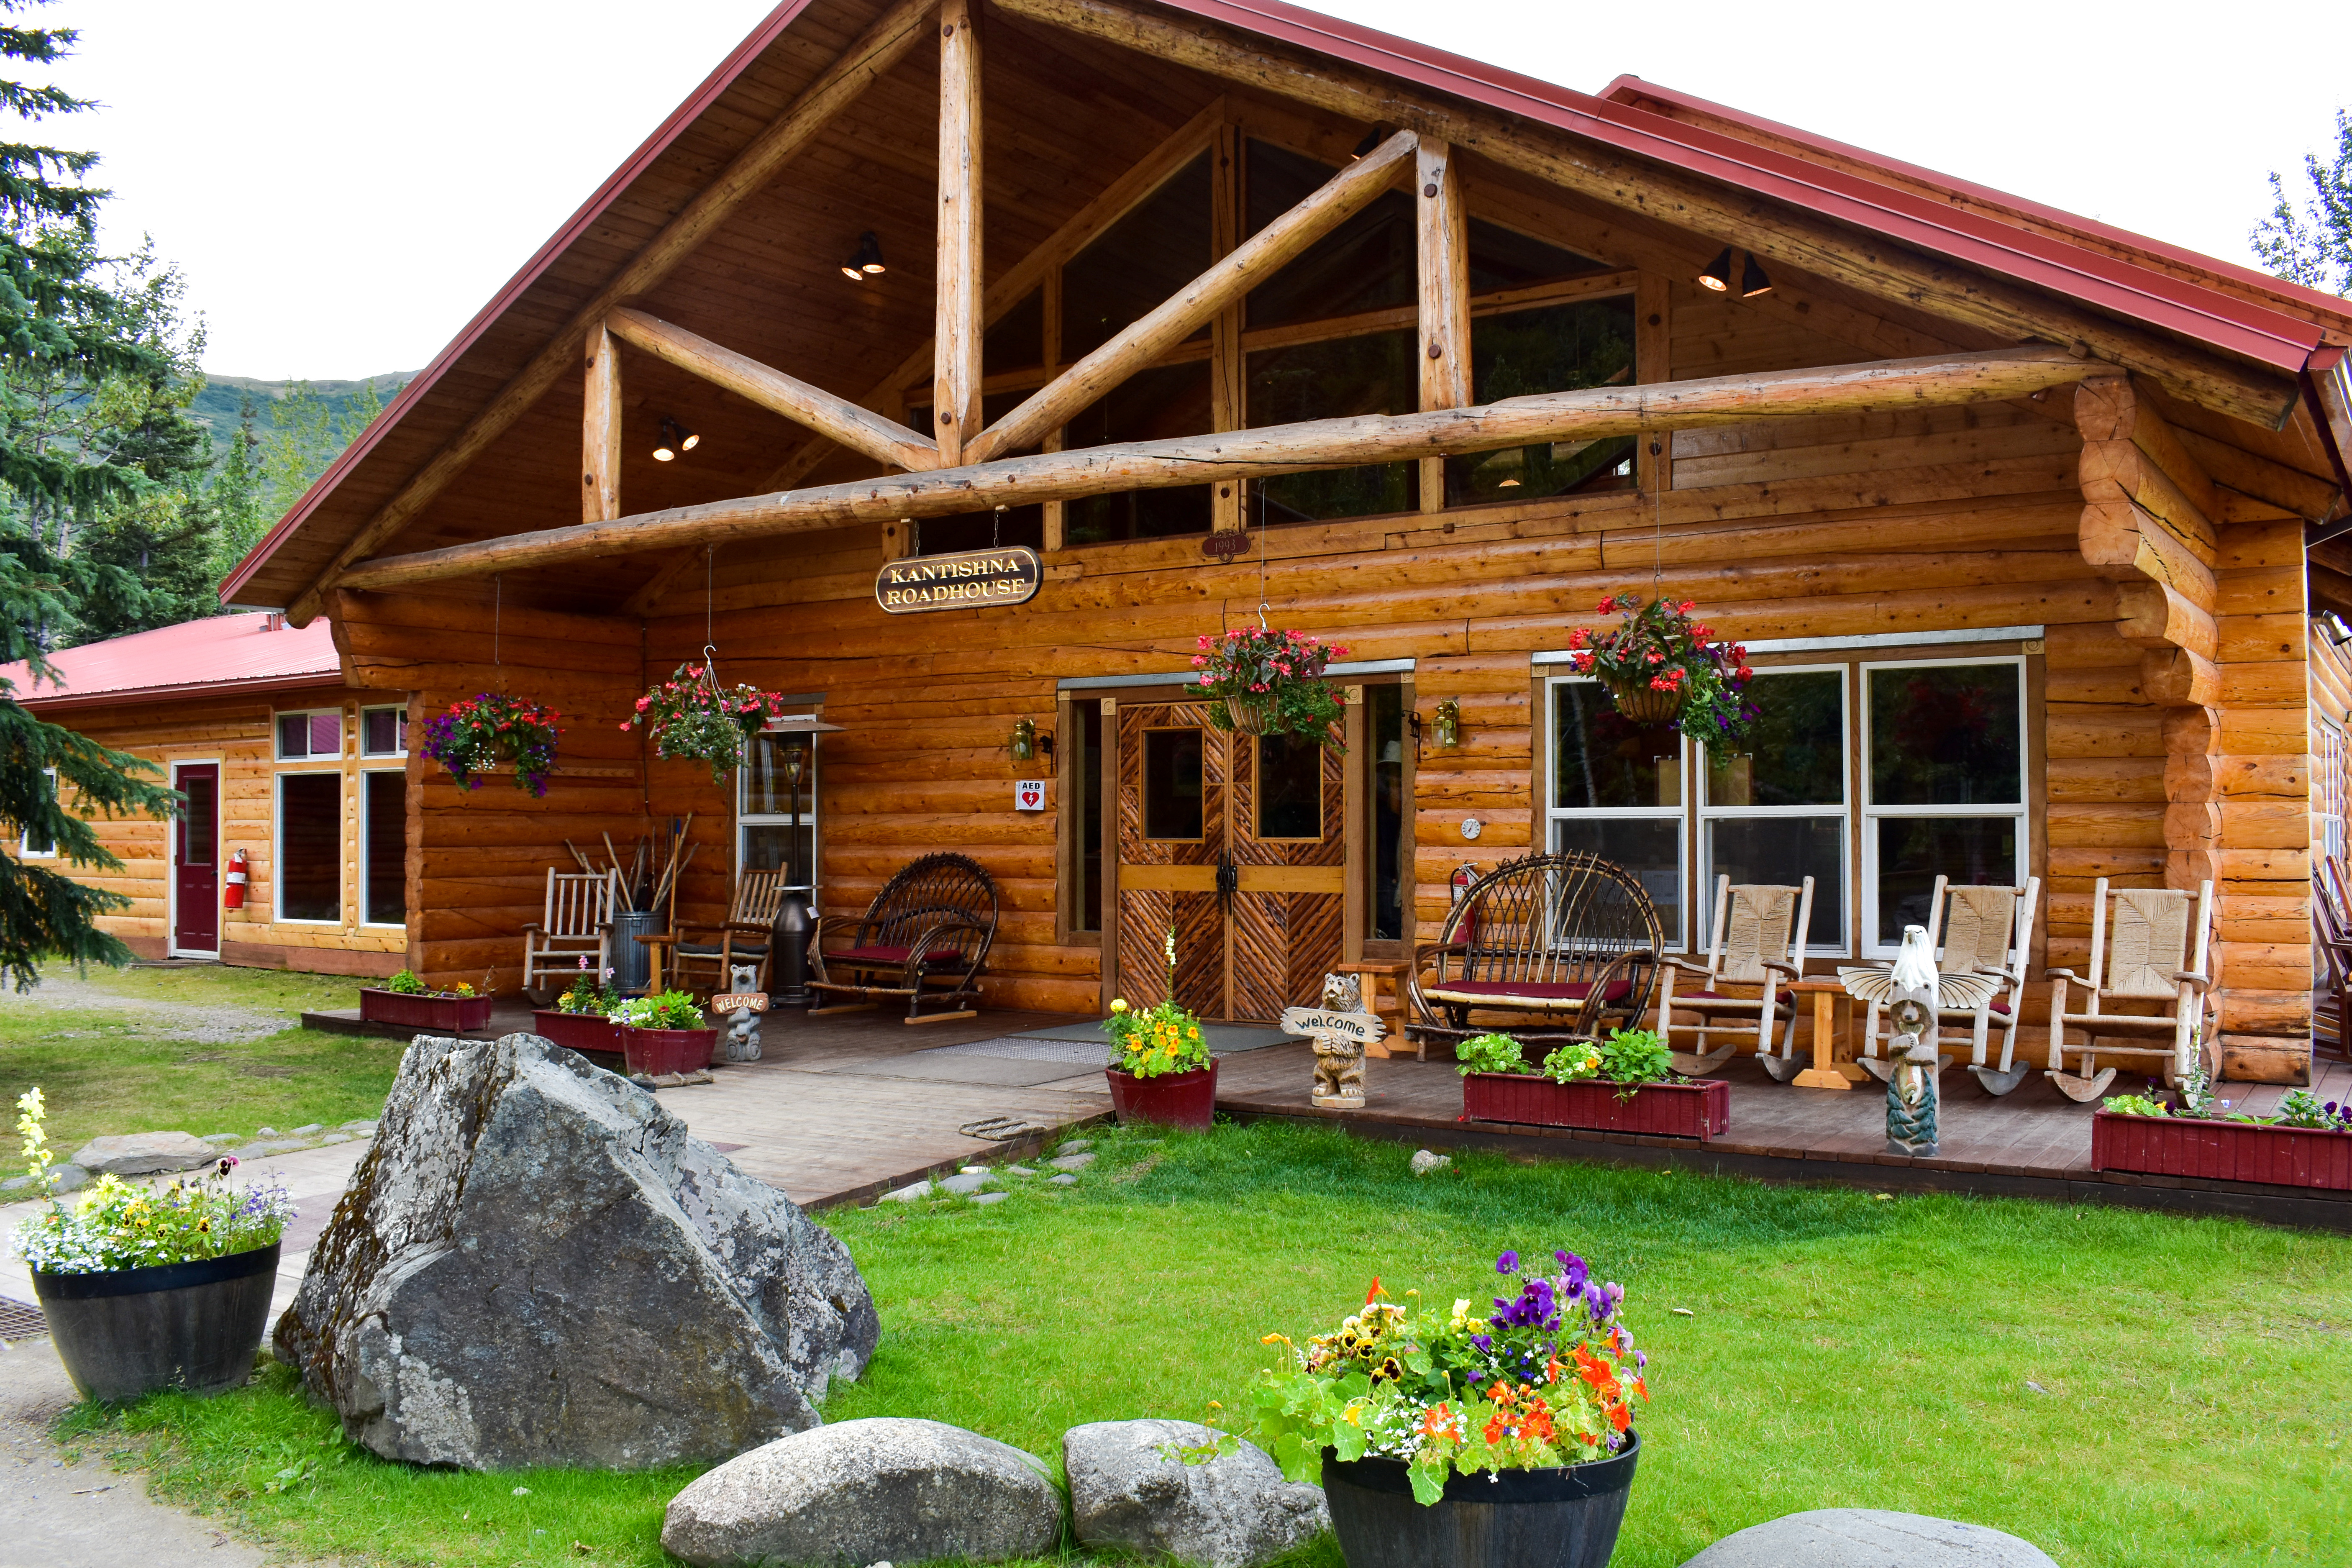 Denali National Park Lodge, Kantishna Roadhouse